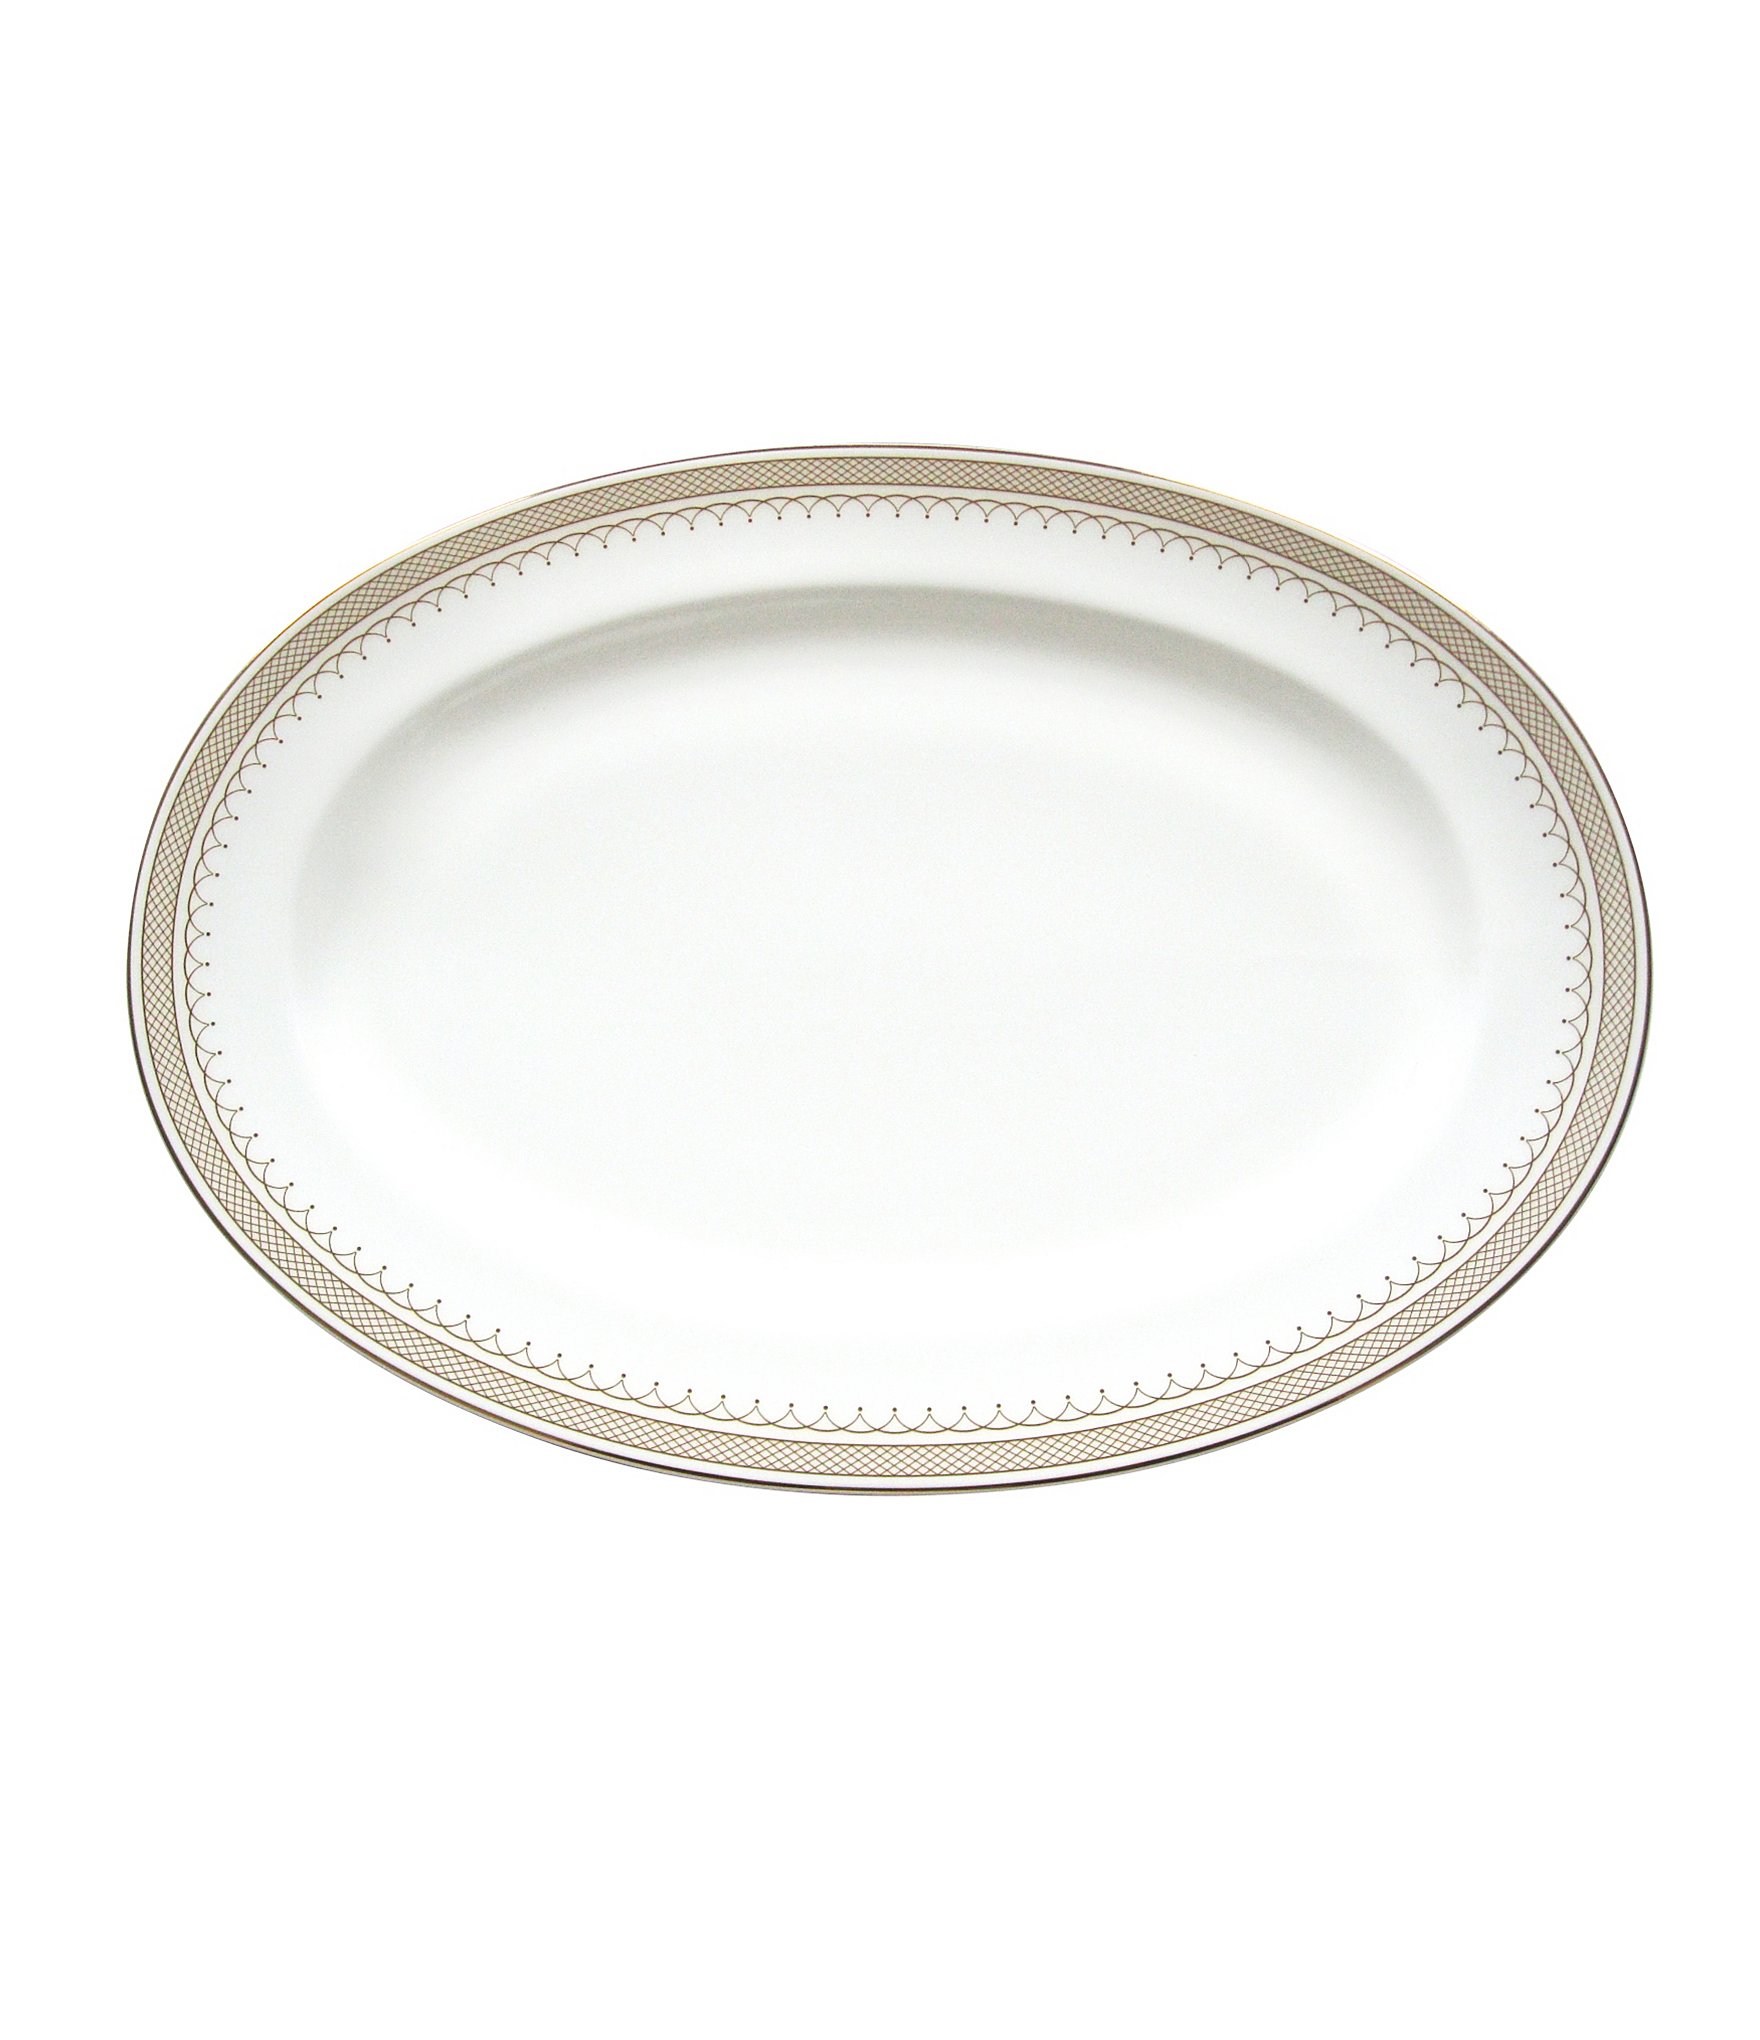 Serving Platters & Trays | Dillards